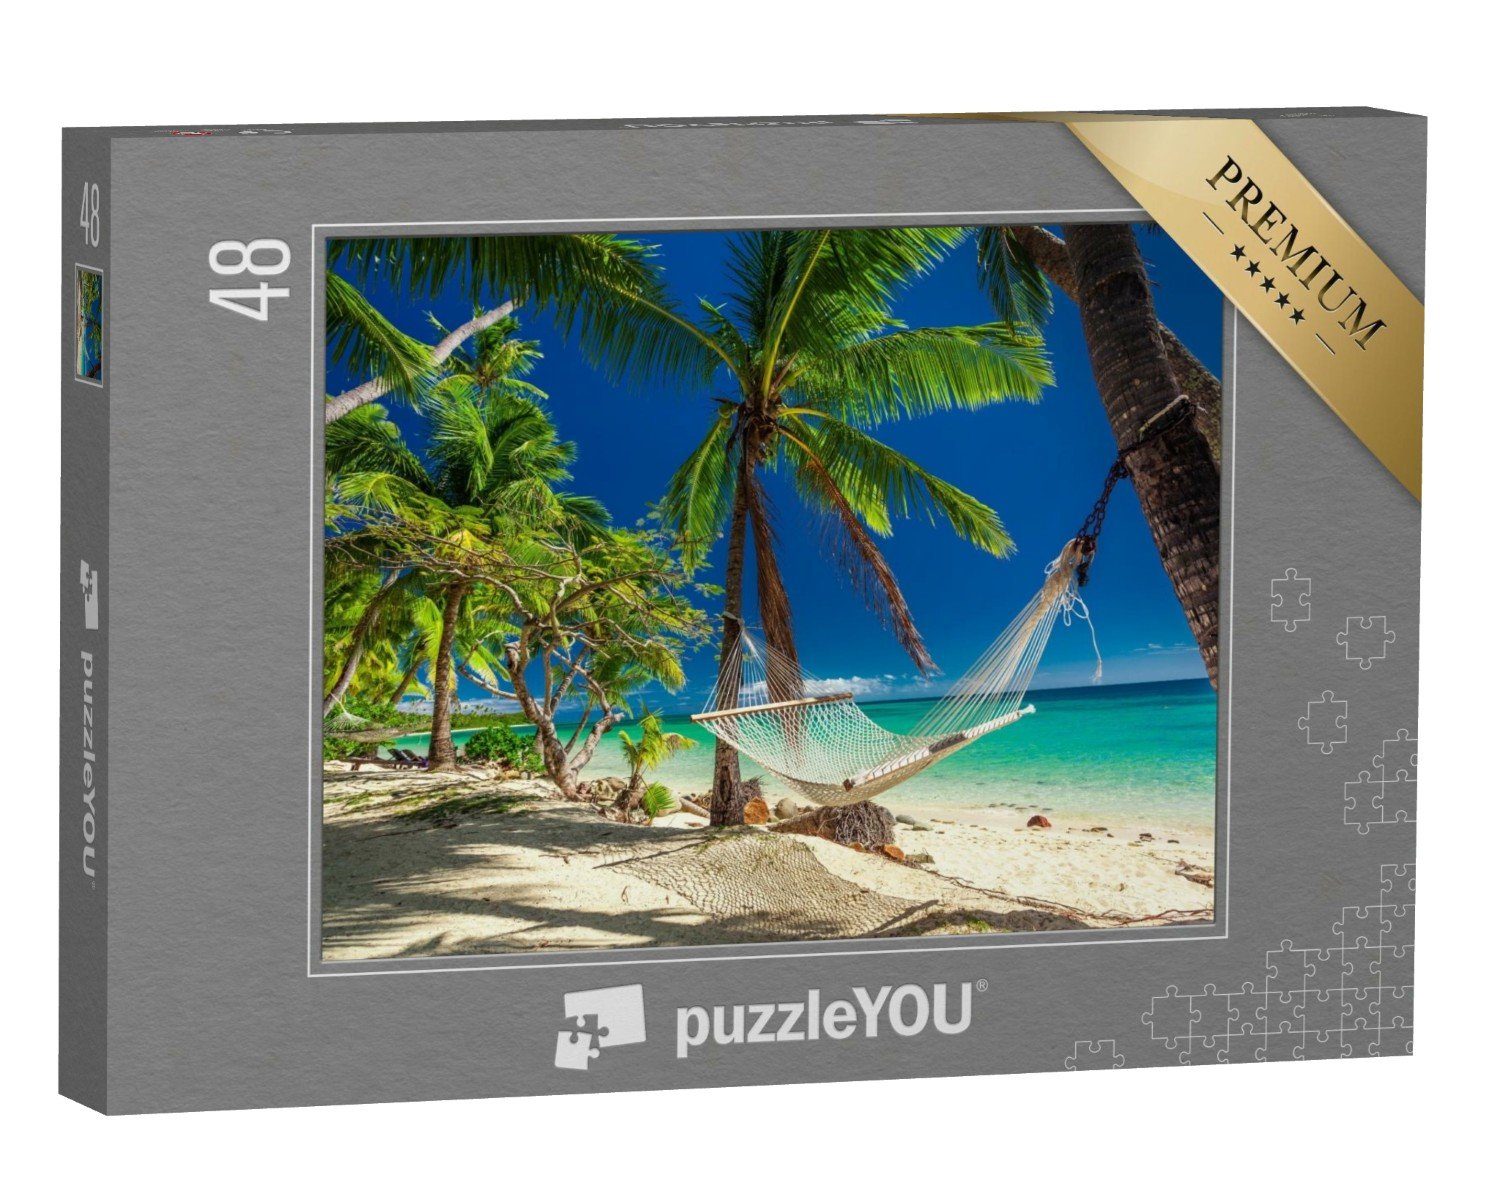 puzzleYOU Puzzle Hängematte unter 48 48 Teile, Teile Teile, tropischen 500 Puzzleteile, 100 Palmen, puzzleYOU-Kollektionen Teile, 200 Fidschi-Inseln